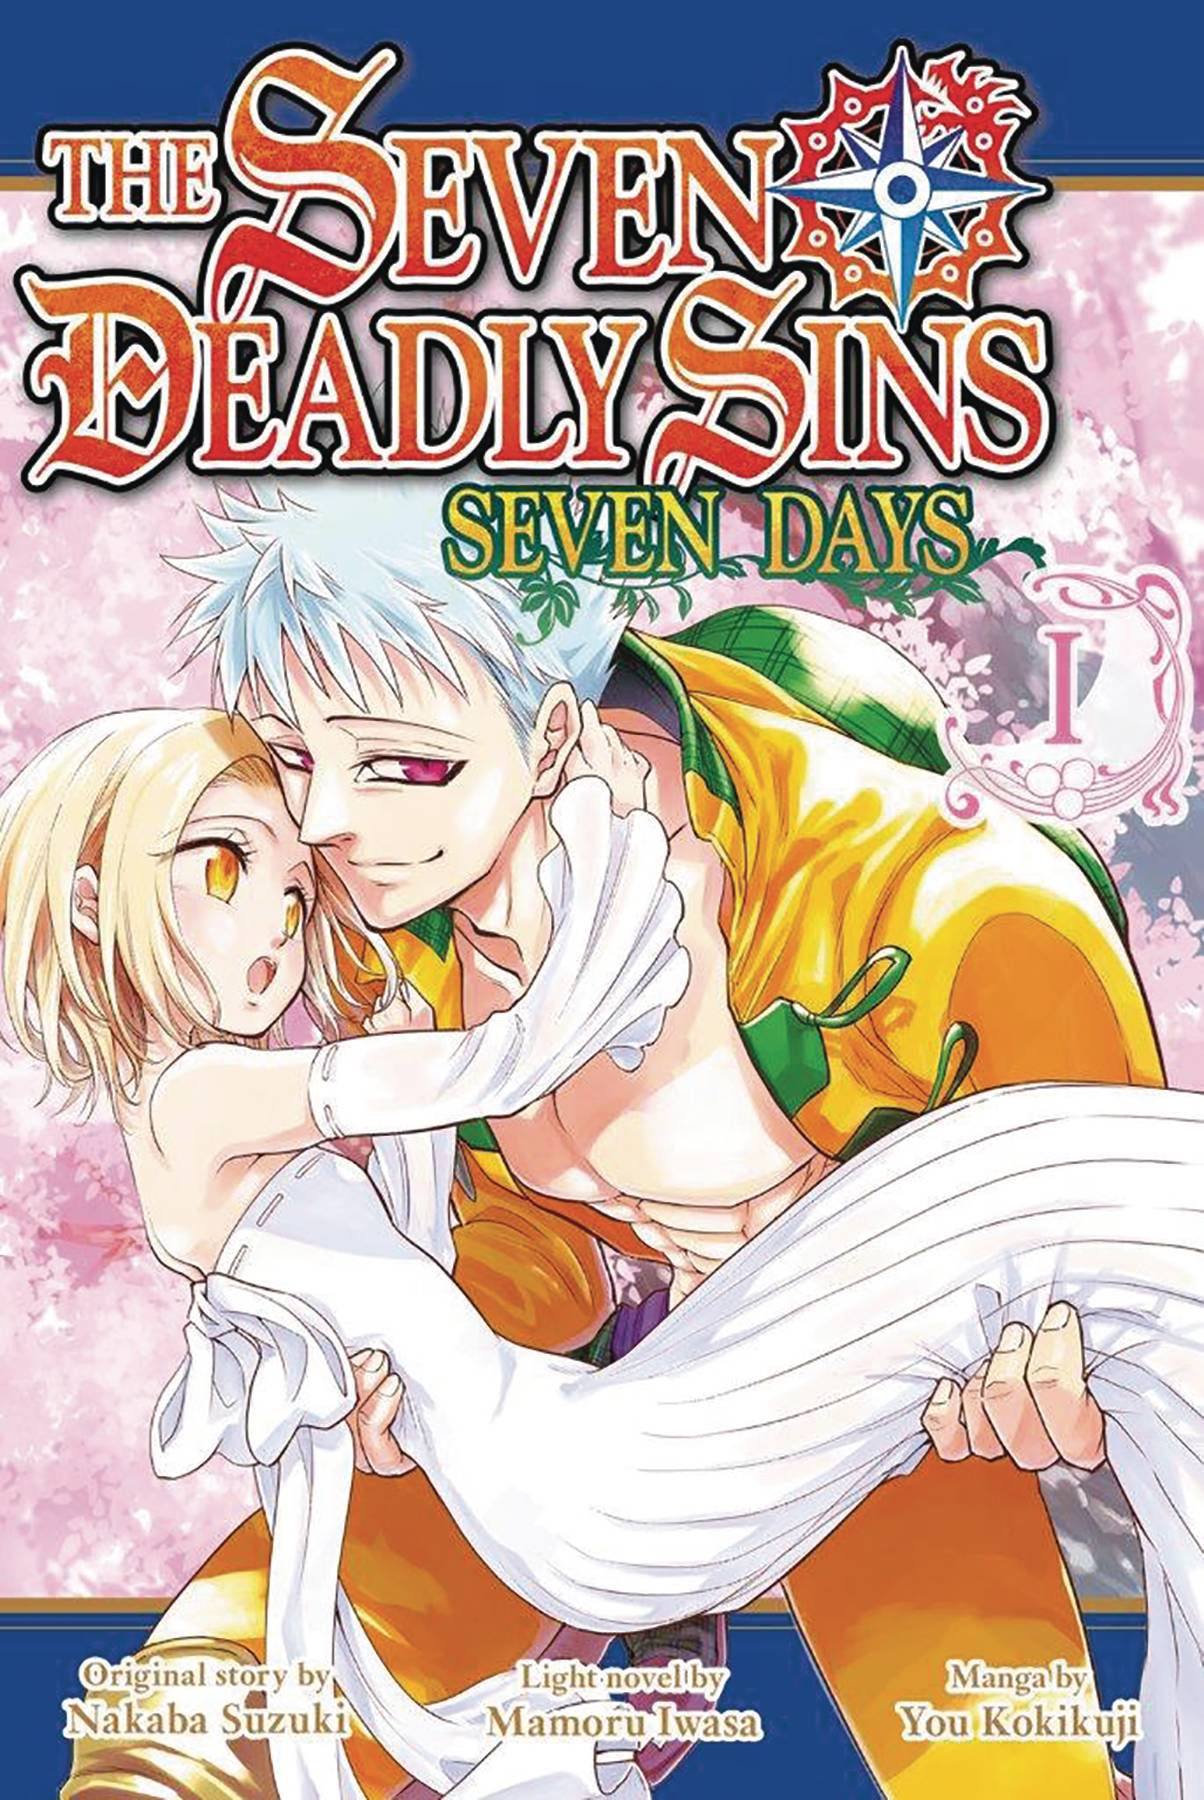 Seven Deadly Sins Seven Days Manga Volume 1